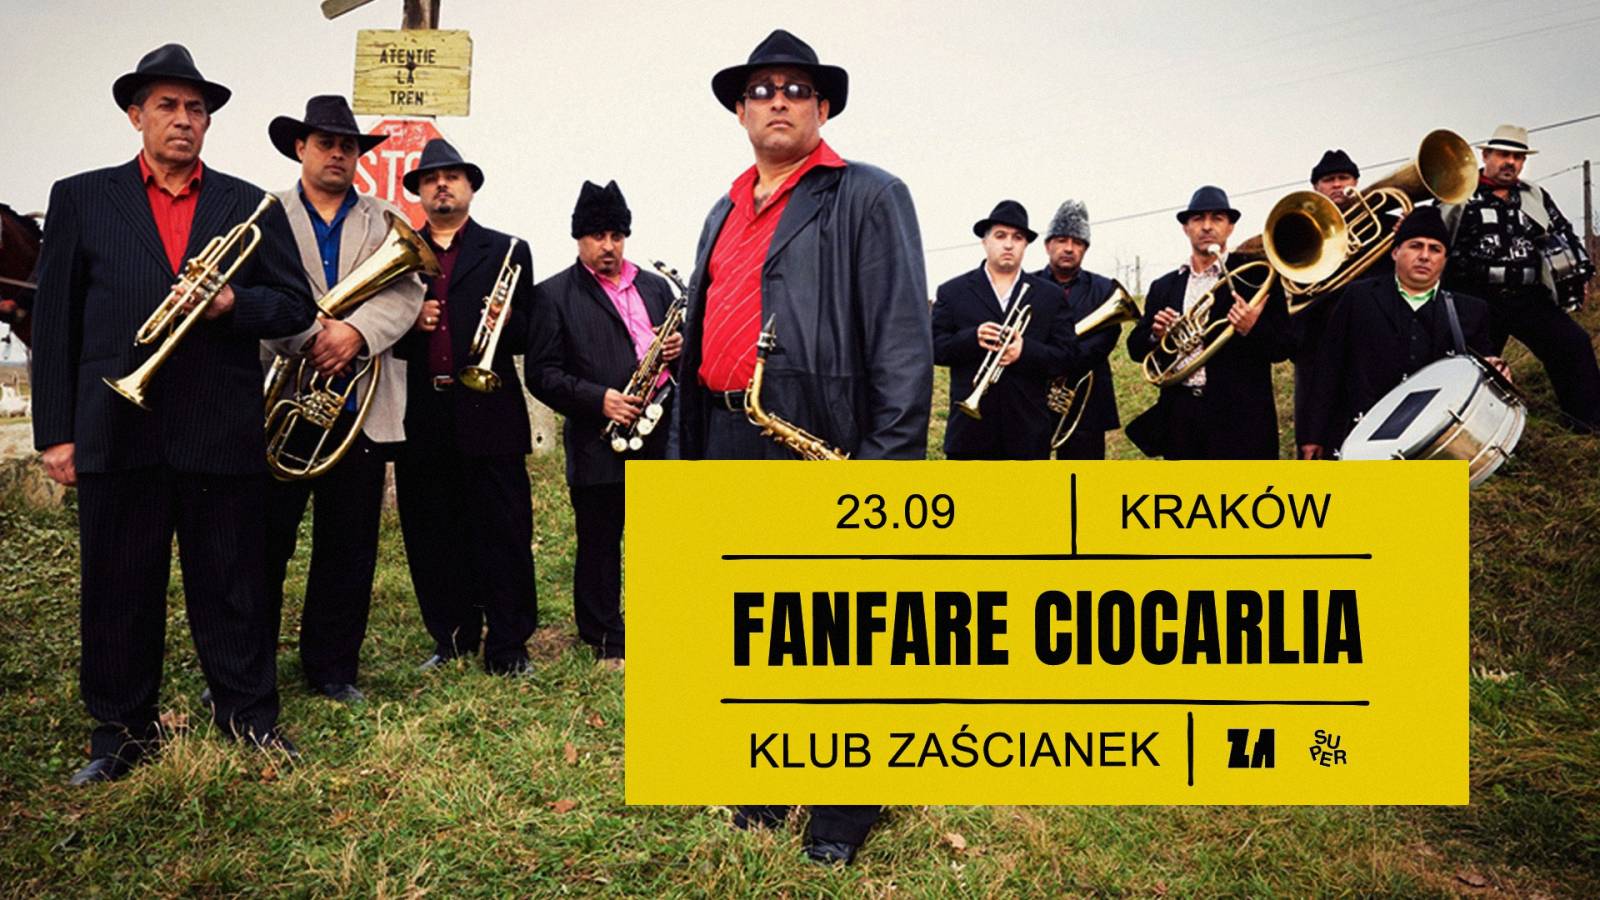 Fanfare Ciocărlia at Zaścianek